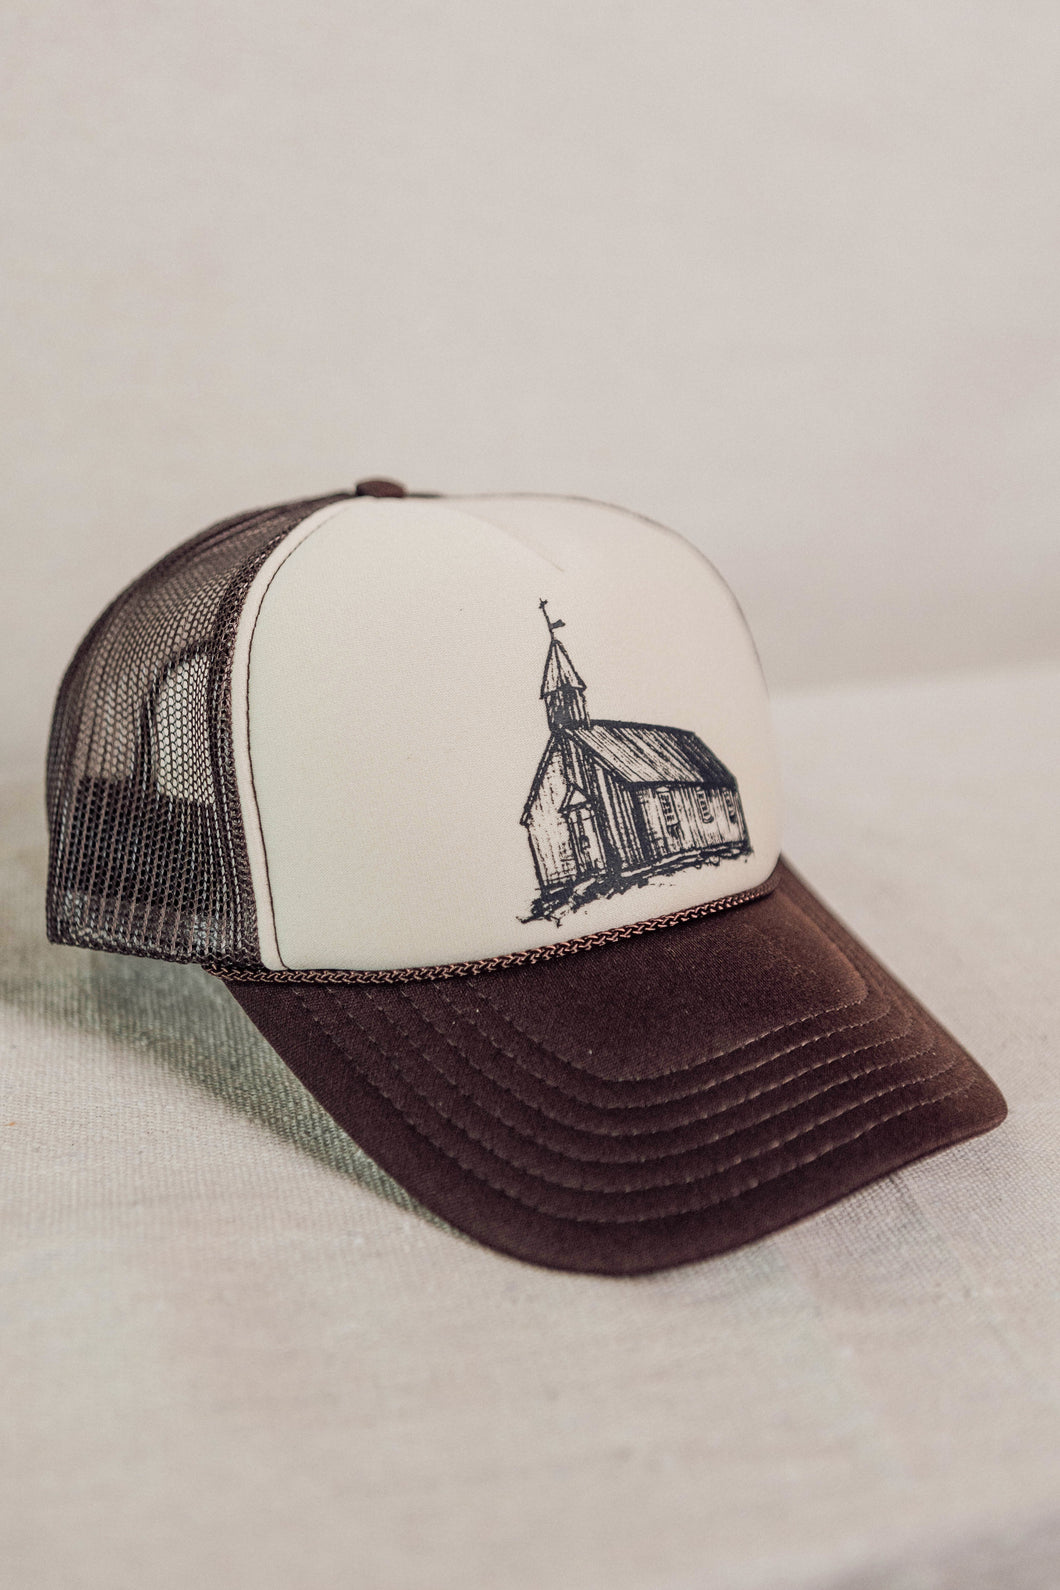 Church Trucker Hat - Tan & Brown